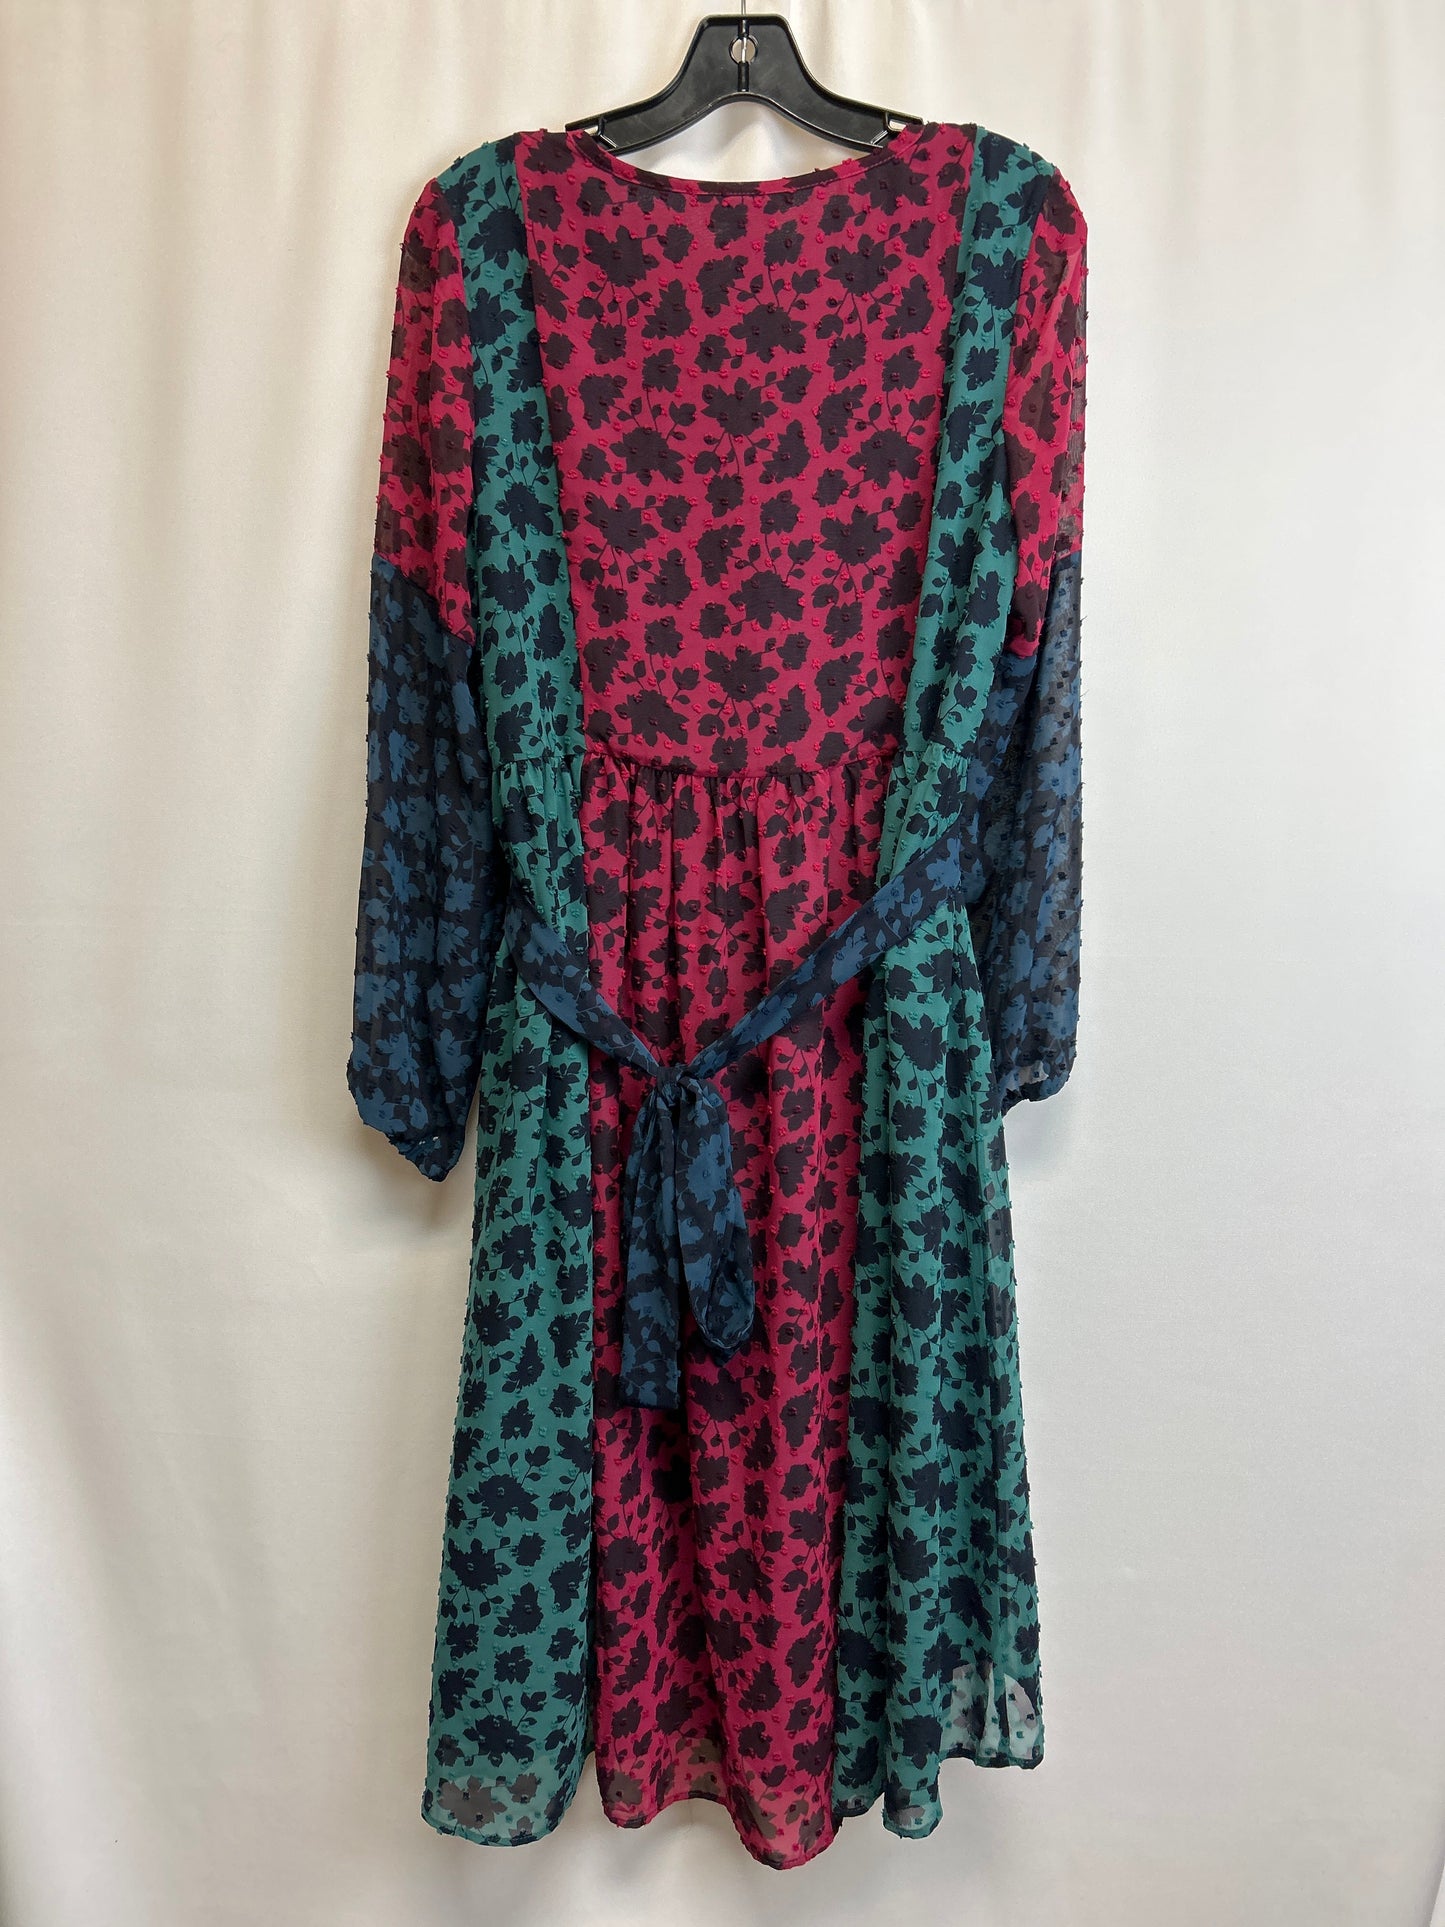 Dress Casual Midi By Matilda Jane  Size: S